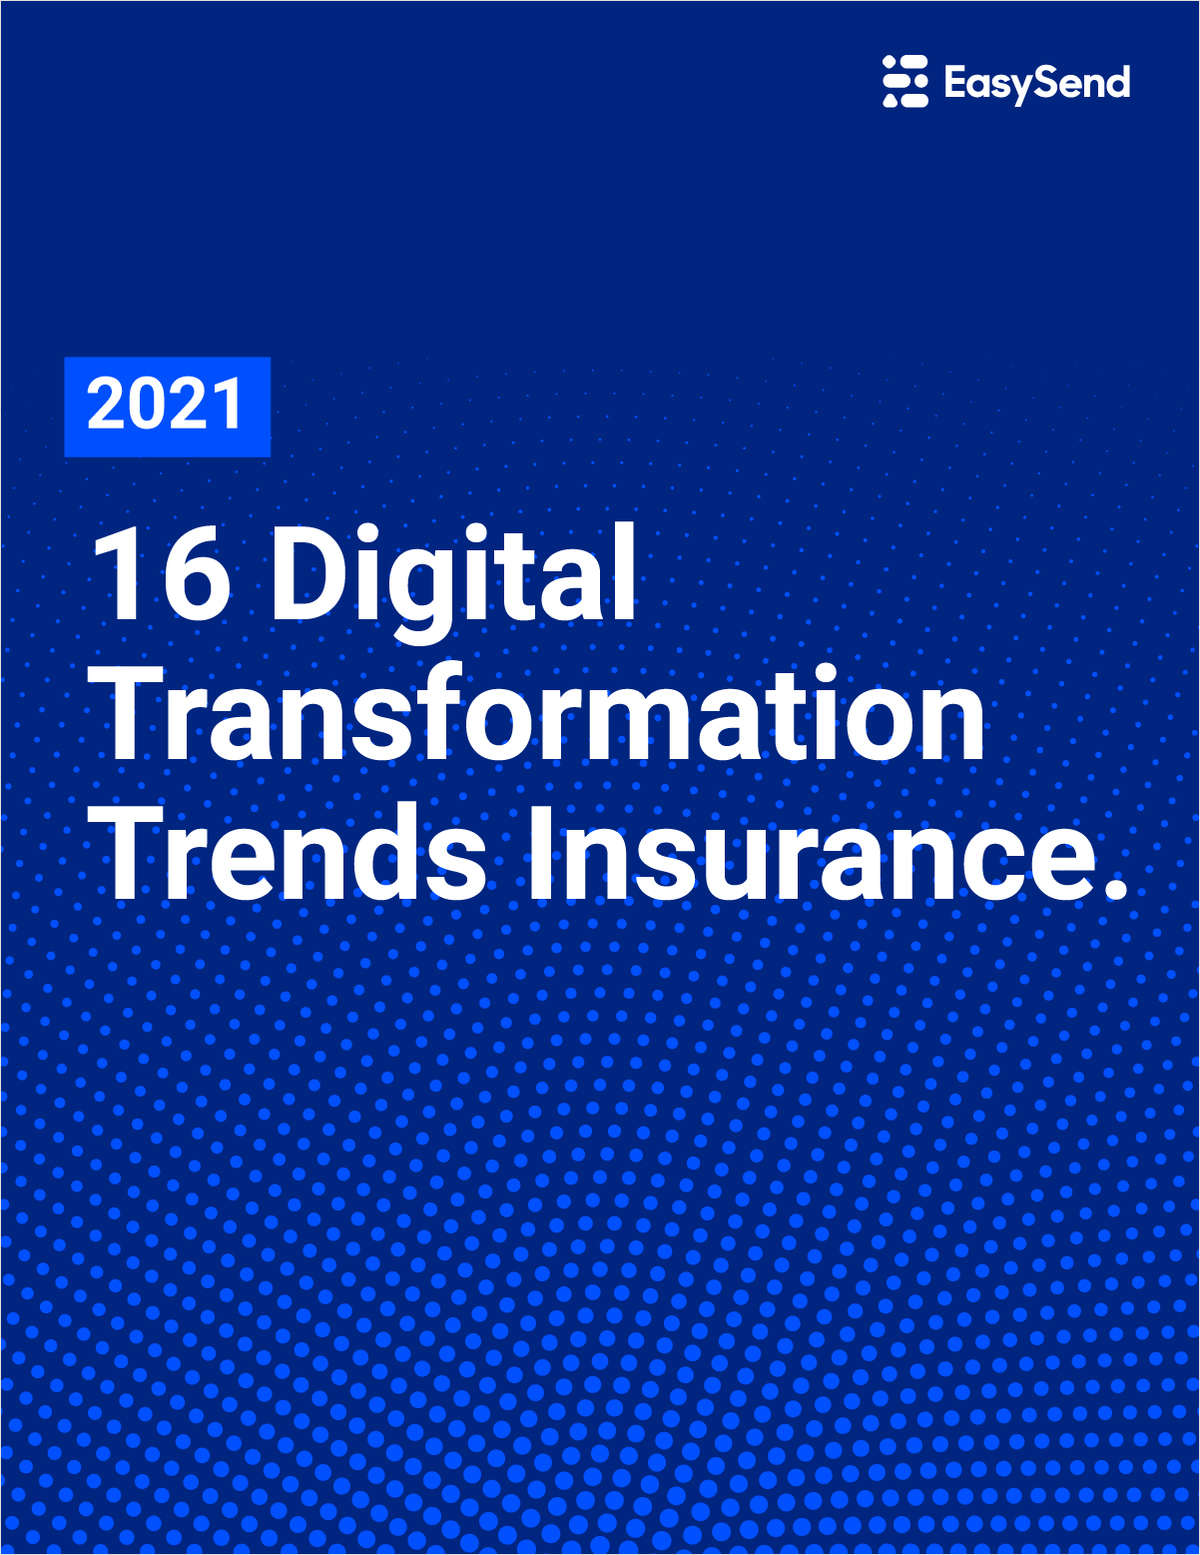 Top 16 Digital Transformation Trends Insurance 2021.